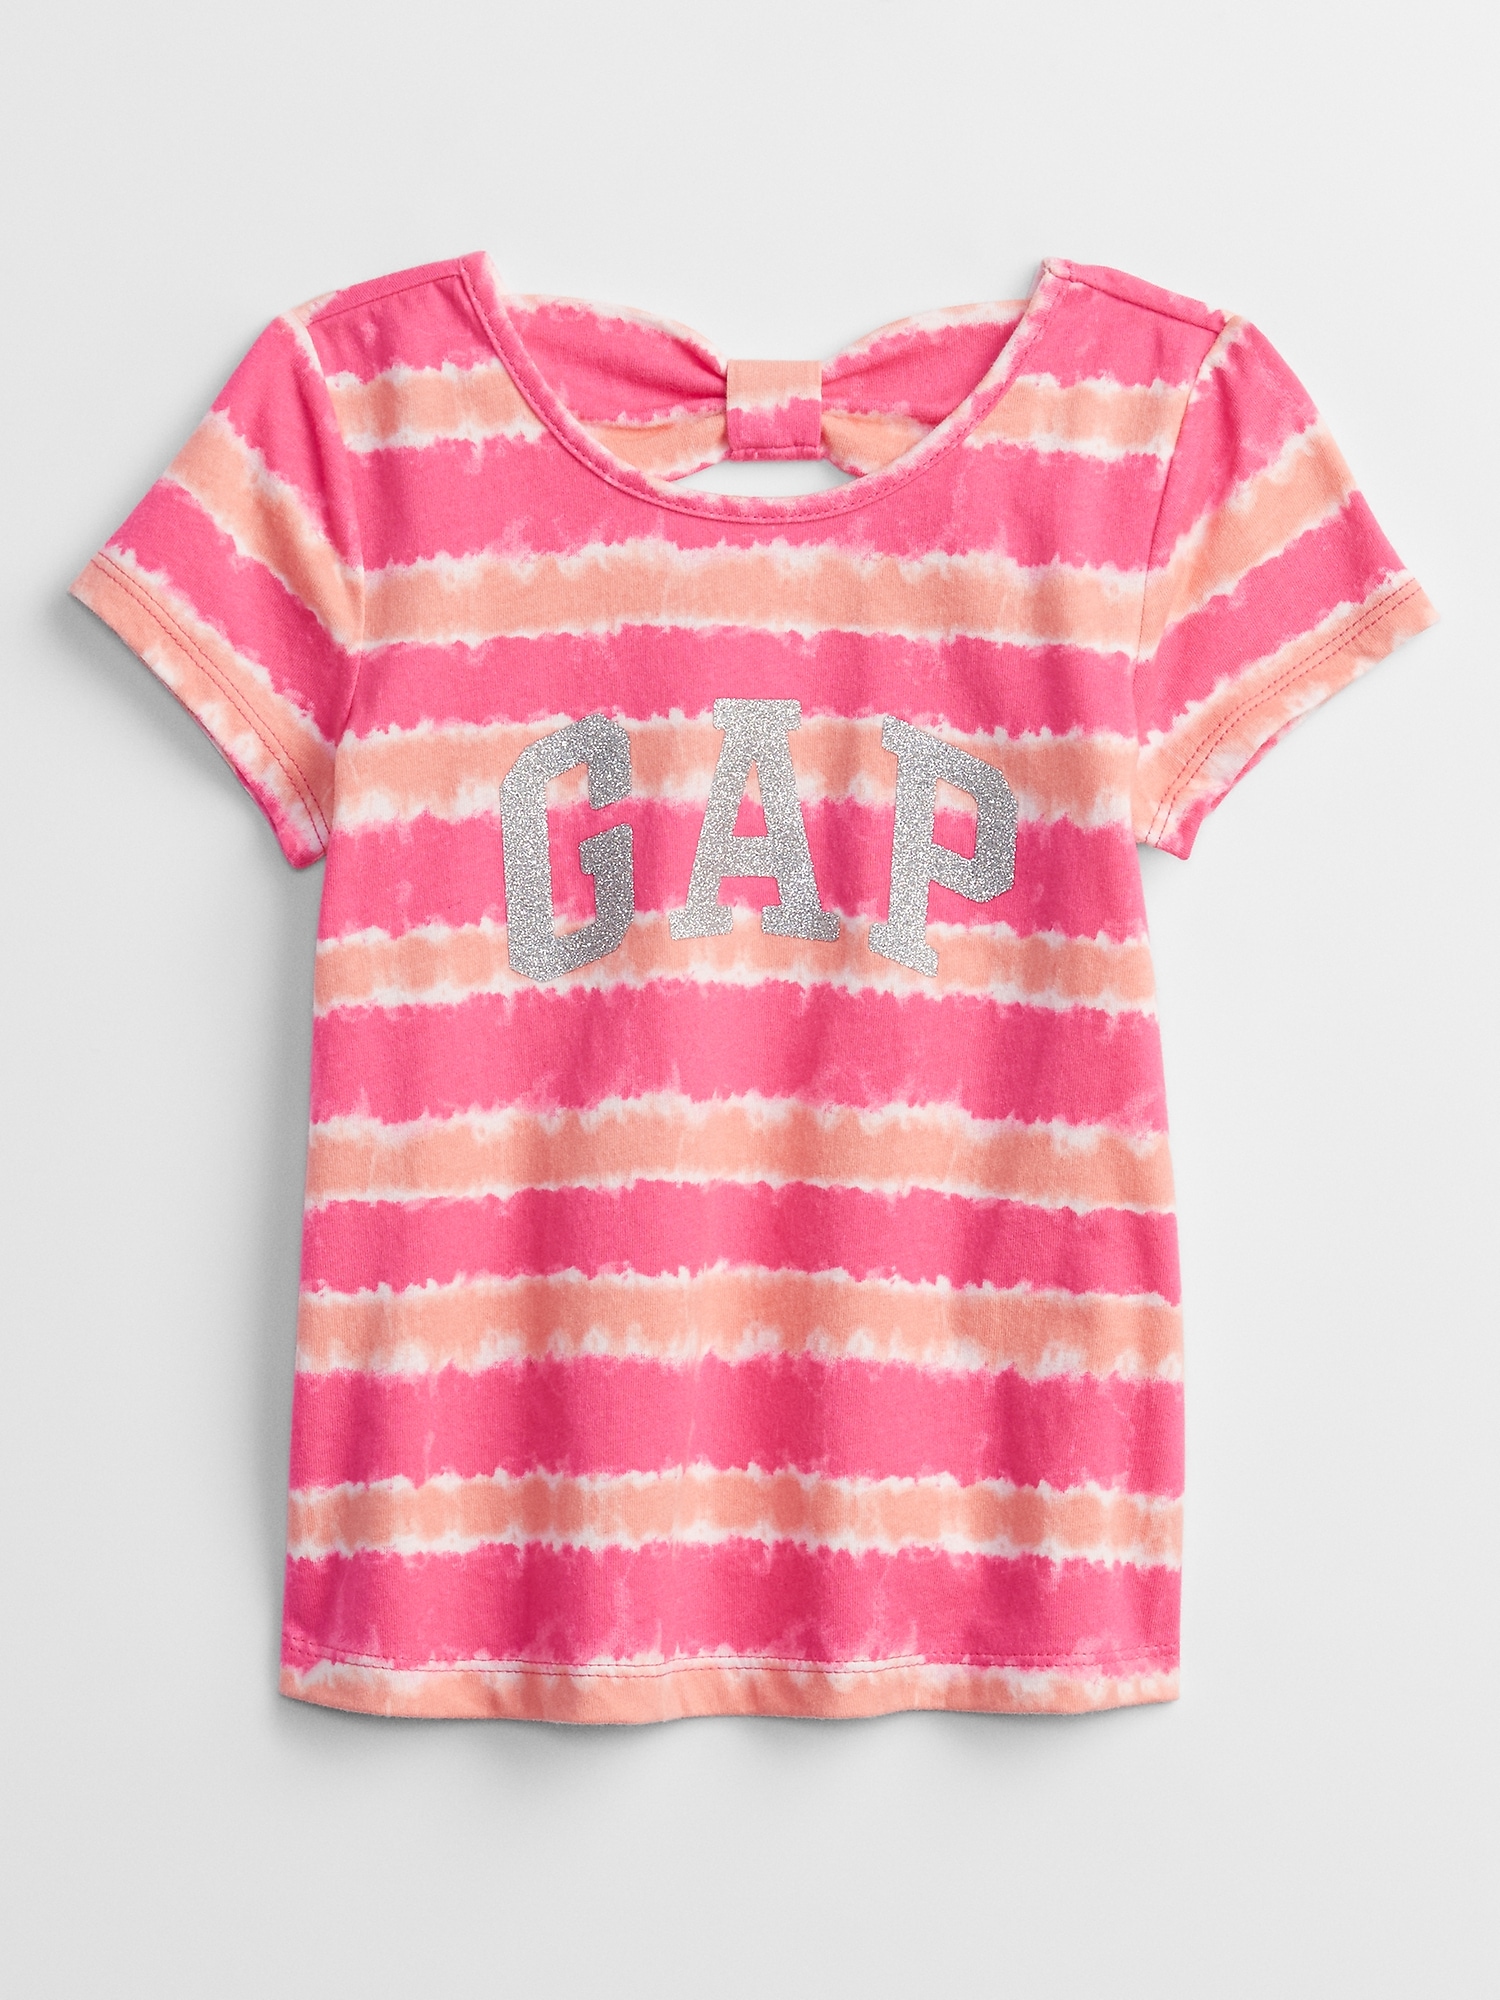 Toddler Bow-Tie Gap Logo Tie-Dye T-Shirt | Gap Factory